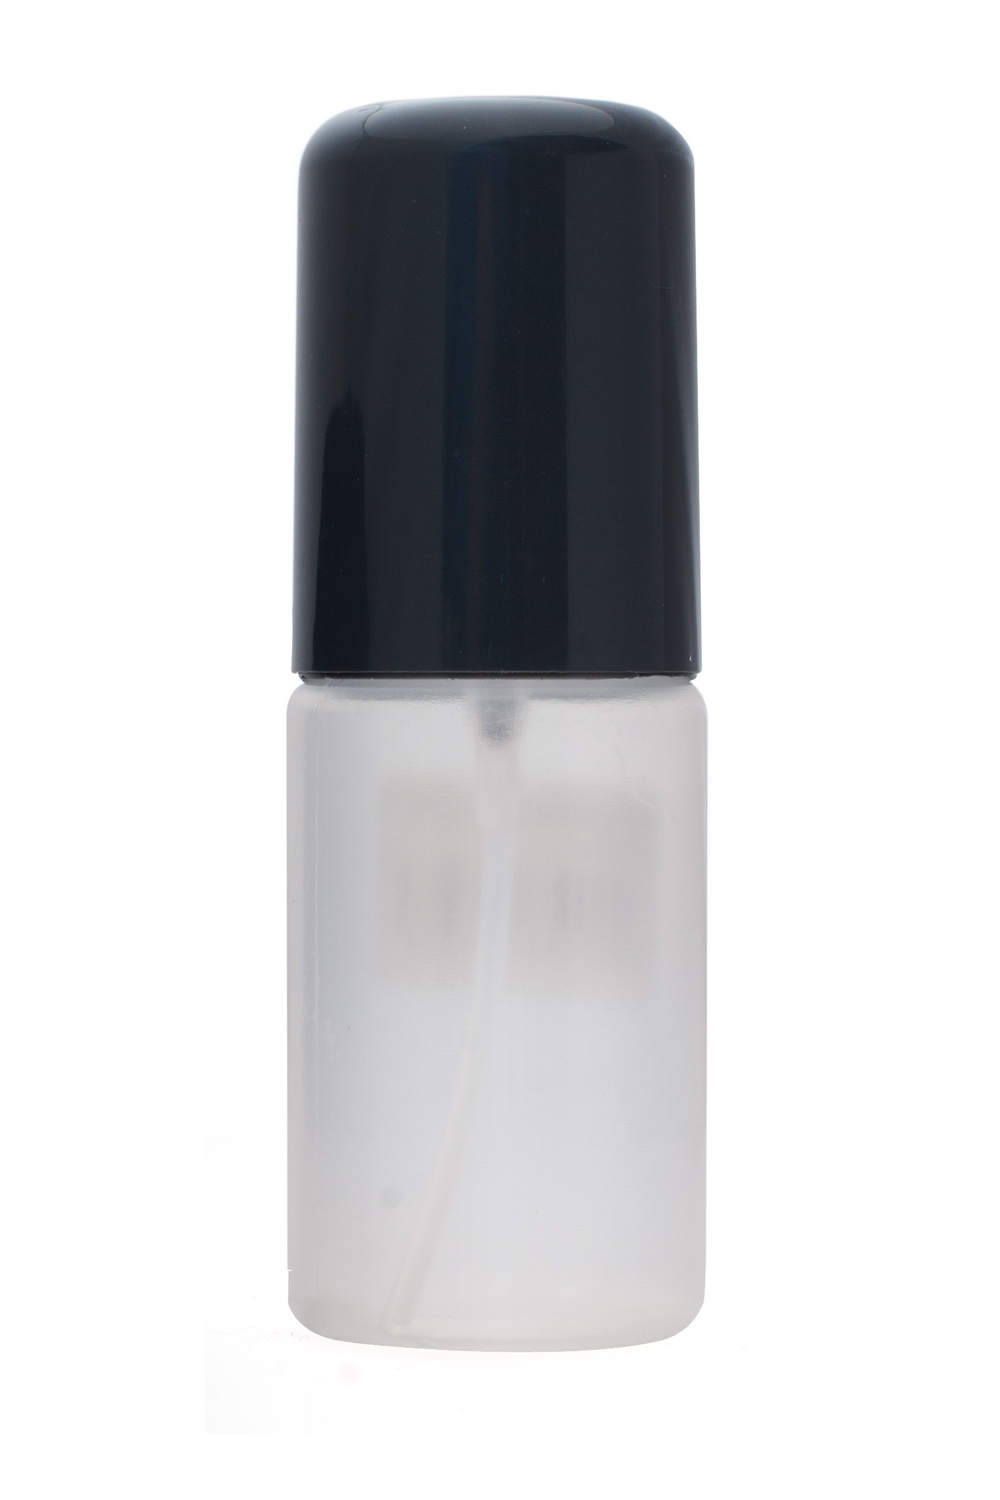 Контейнер-спрей Pump Spray Bottle Empty пустой, 50 мл контейнер для лекарств staino 78 x 83 x 45 персиковый